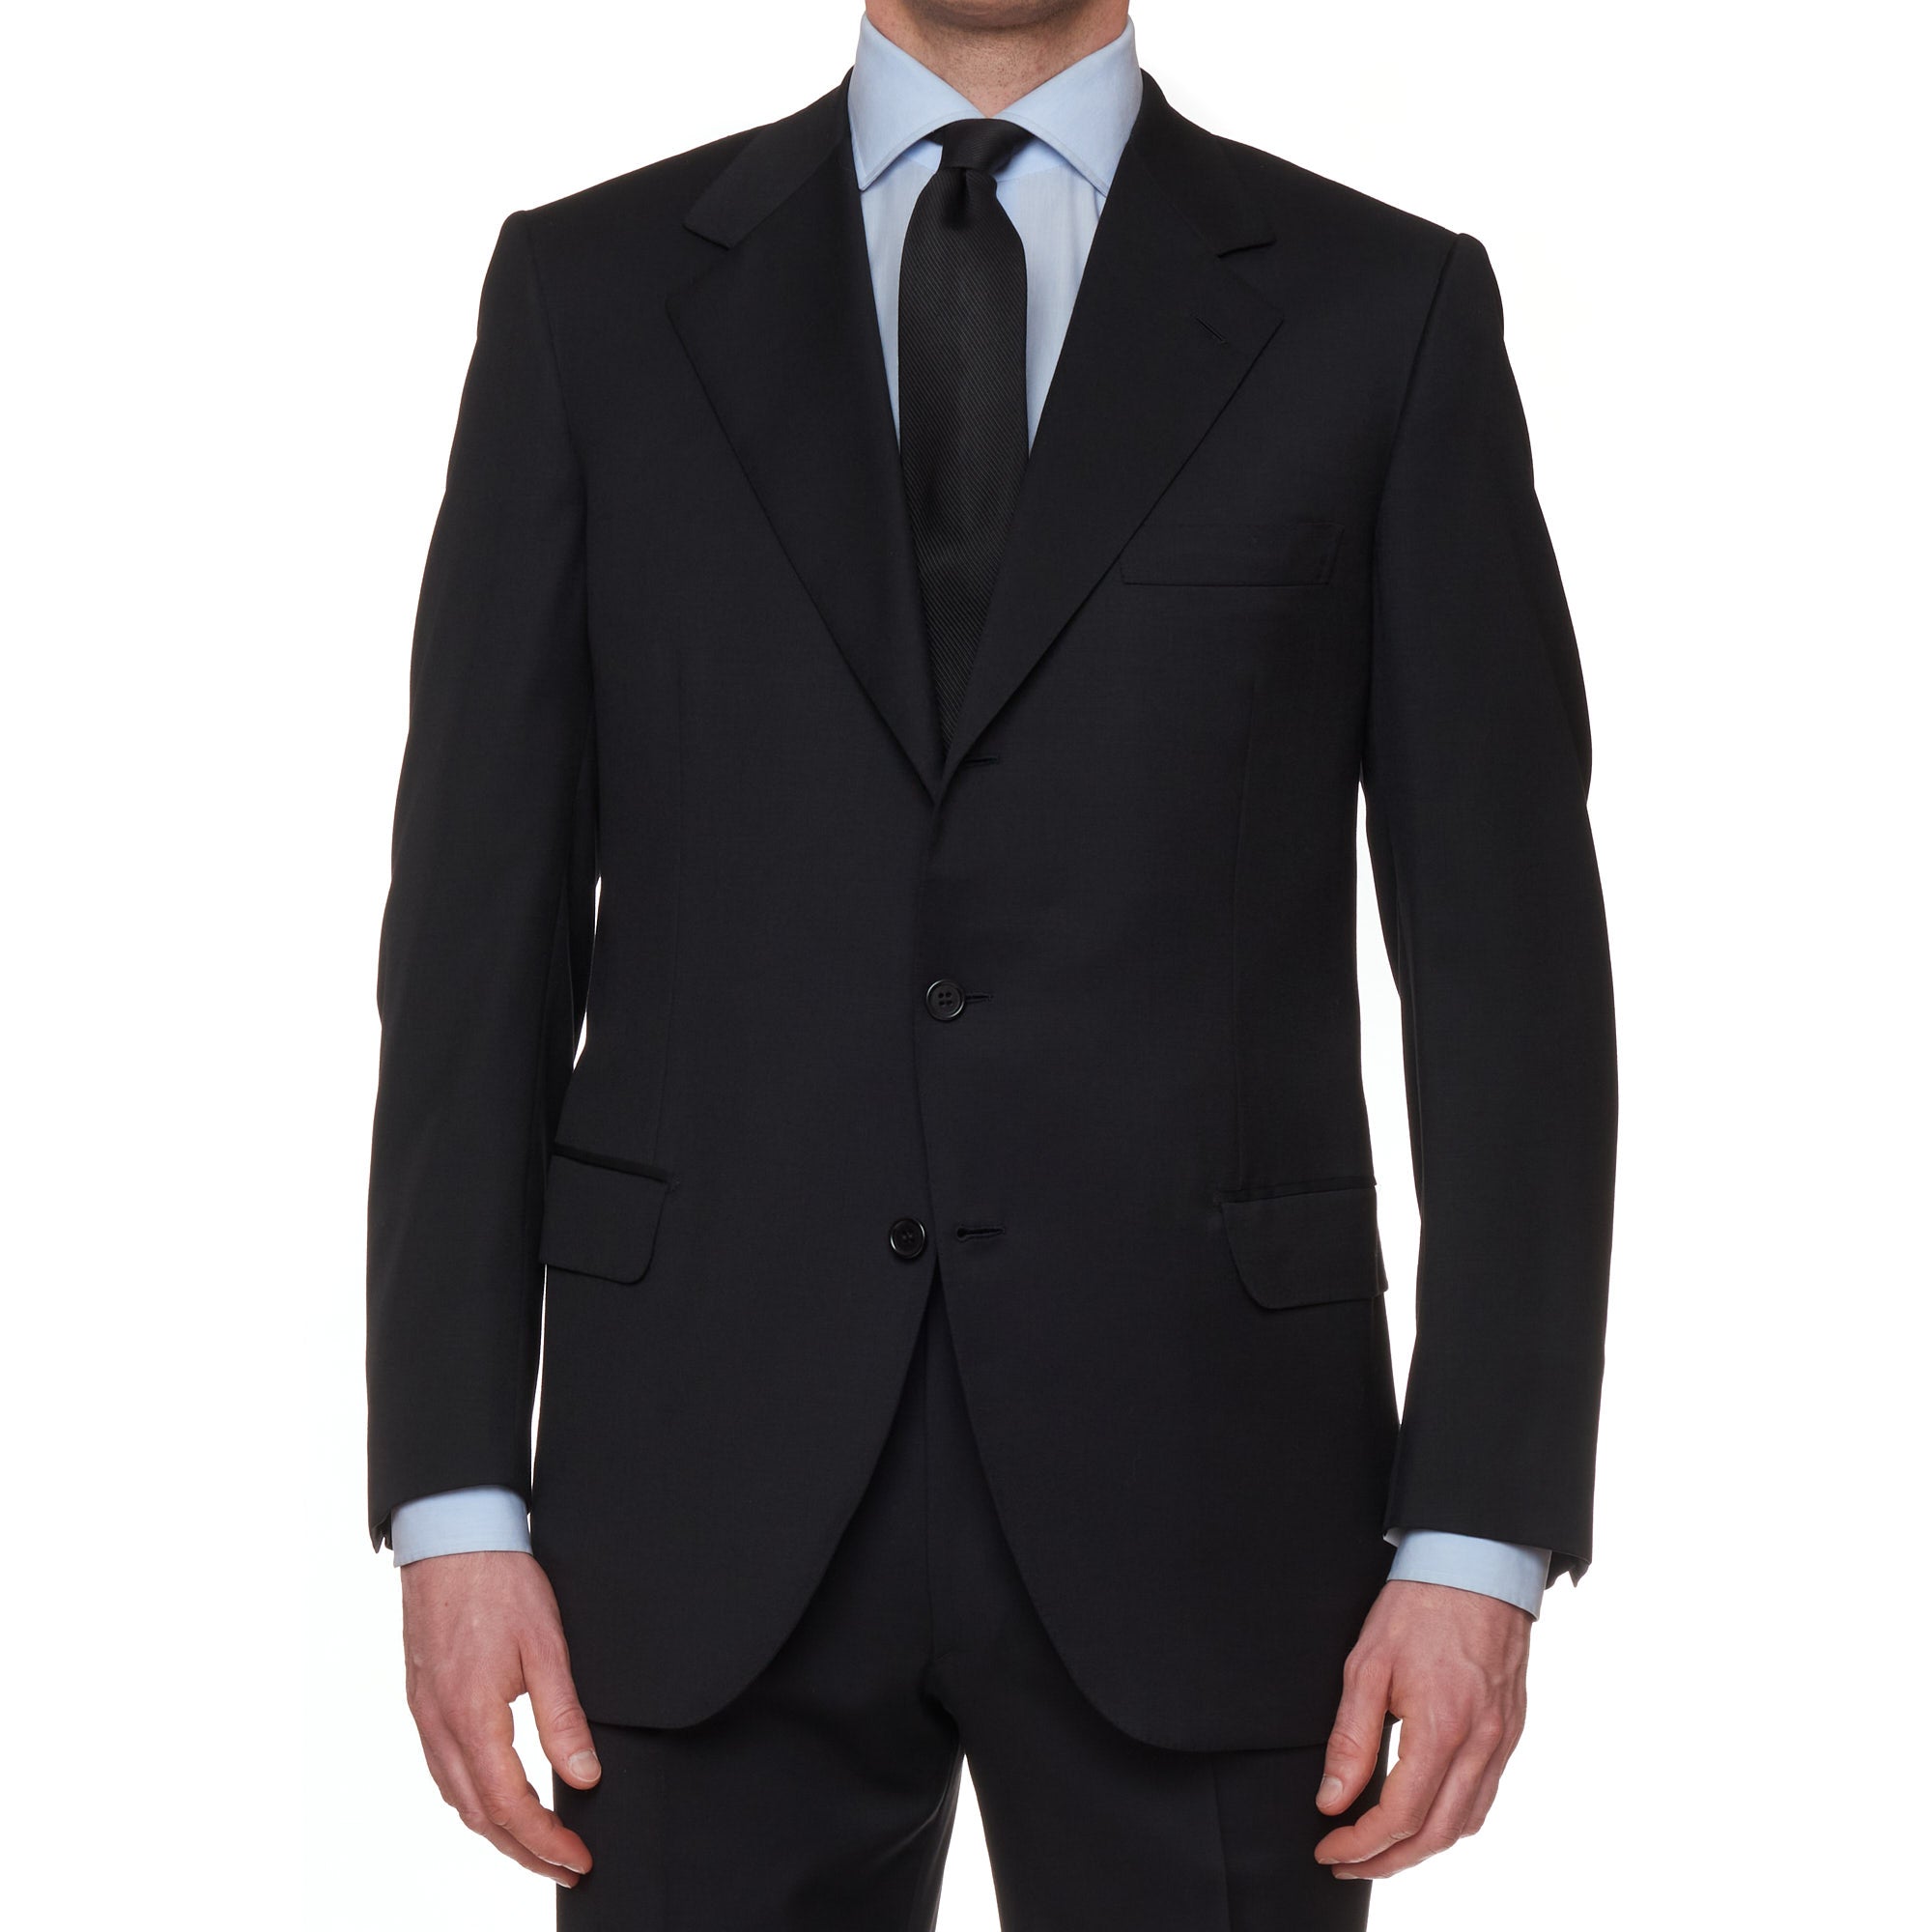 BRIONI "CATONE" Handmade Black Luxury Wool Suit NEW BRIONI